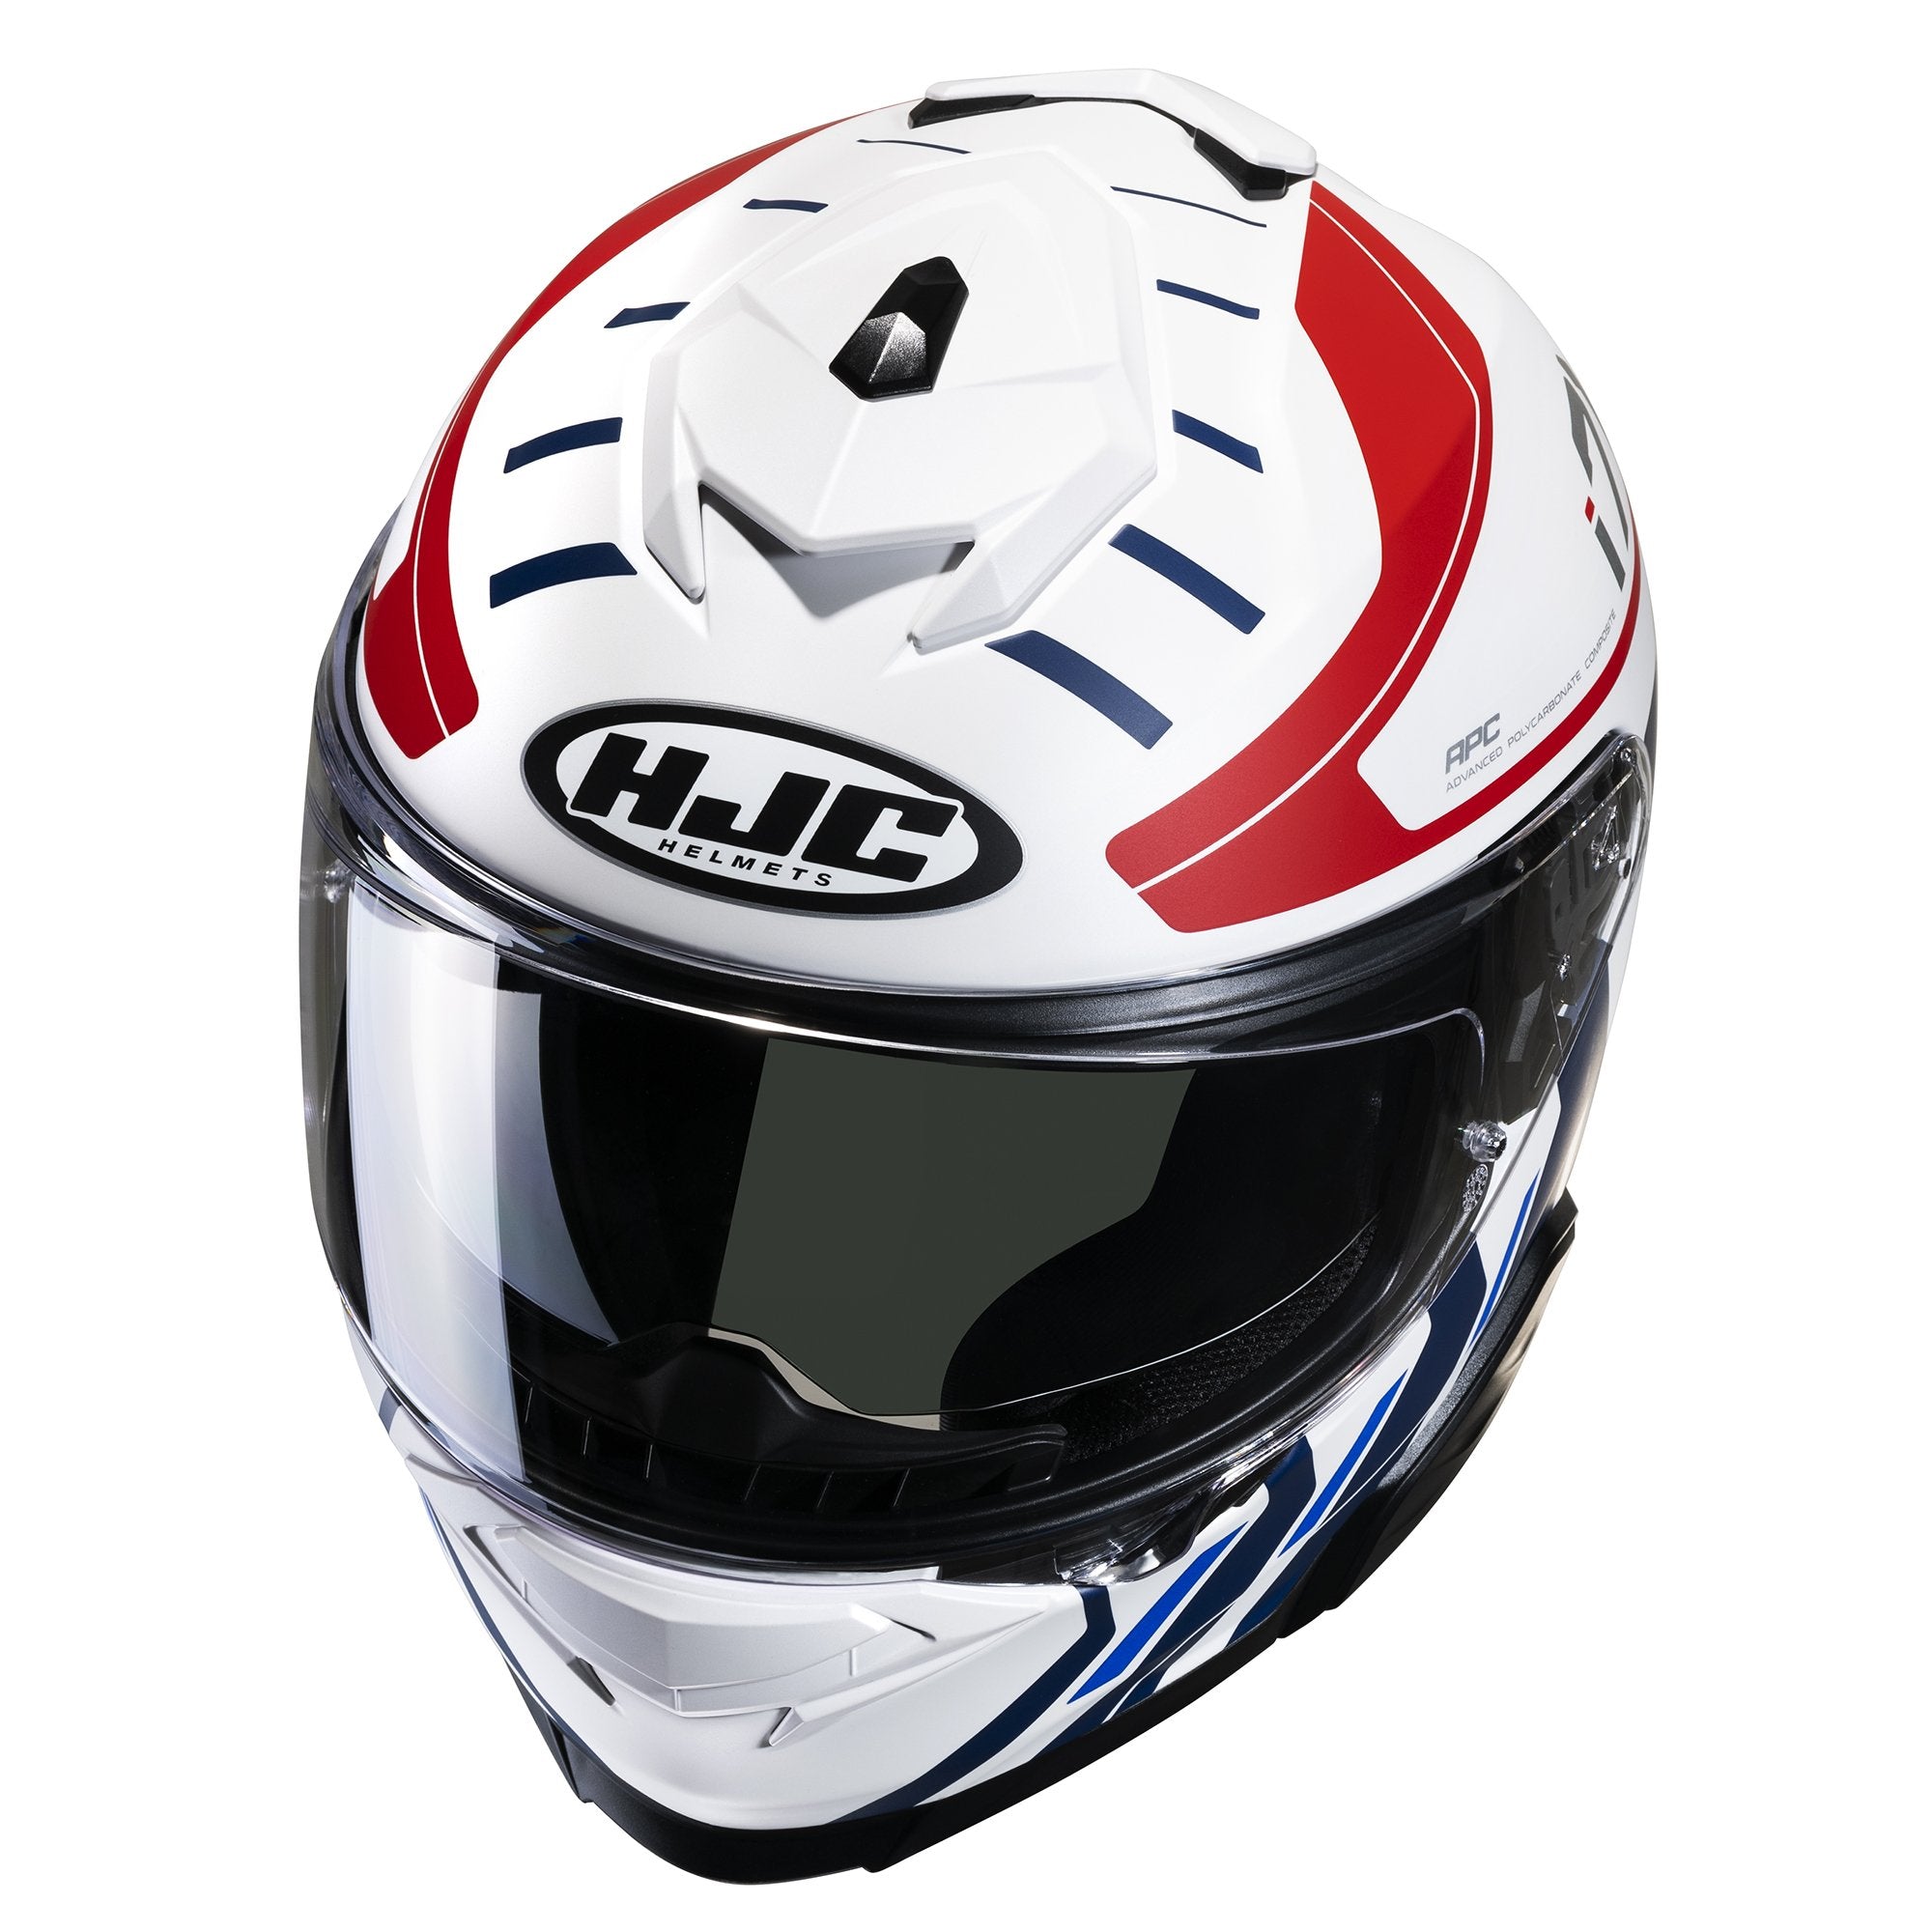 HJC I71 Simo MC21SF White Red Blue Motorcycle Helmet - MaximomotoUK